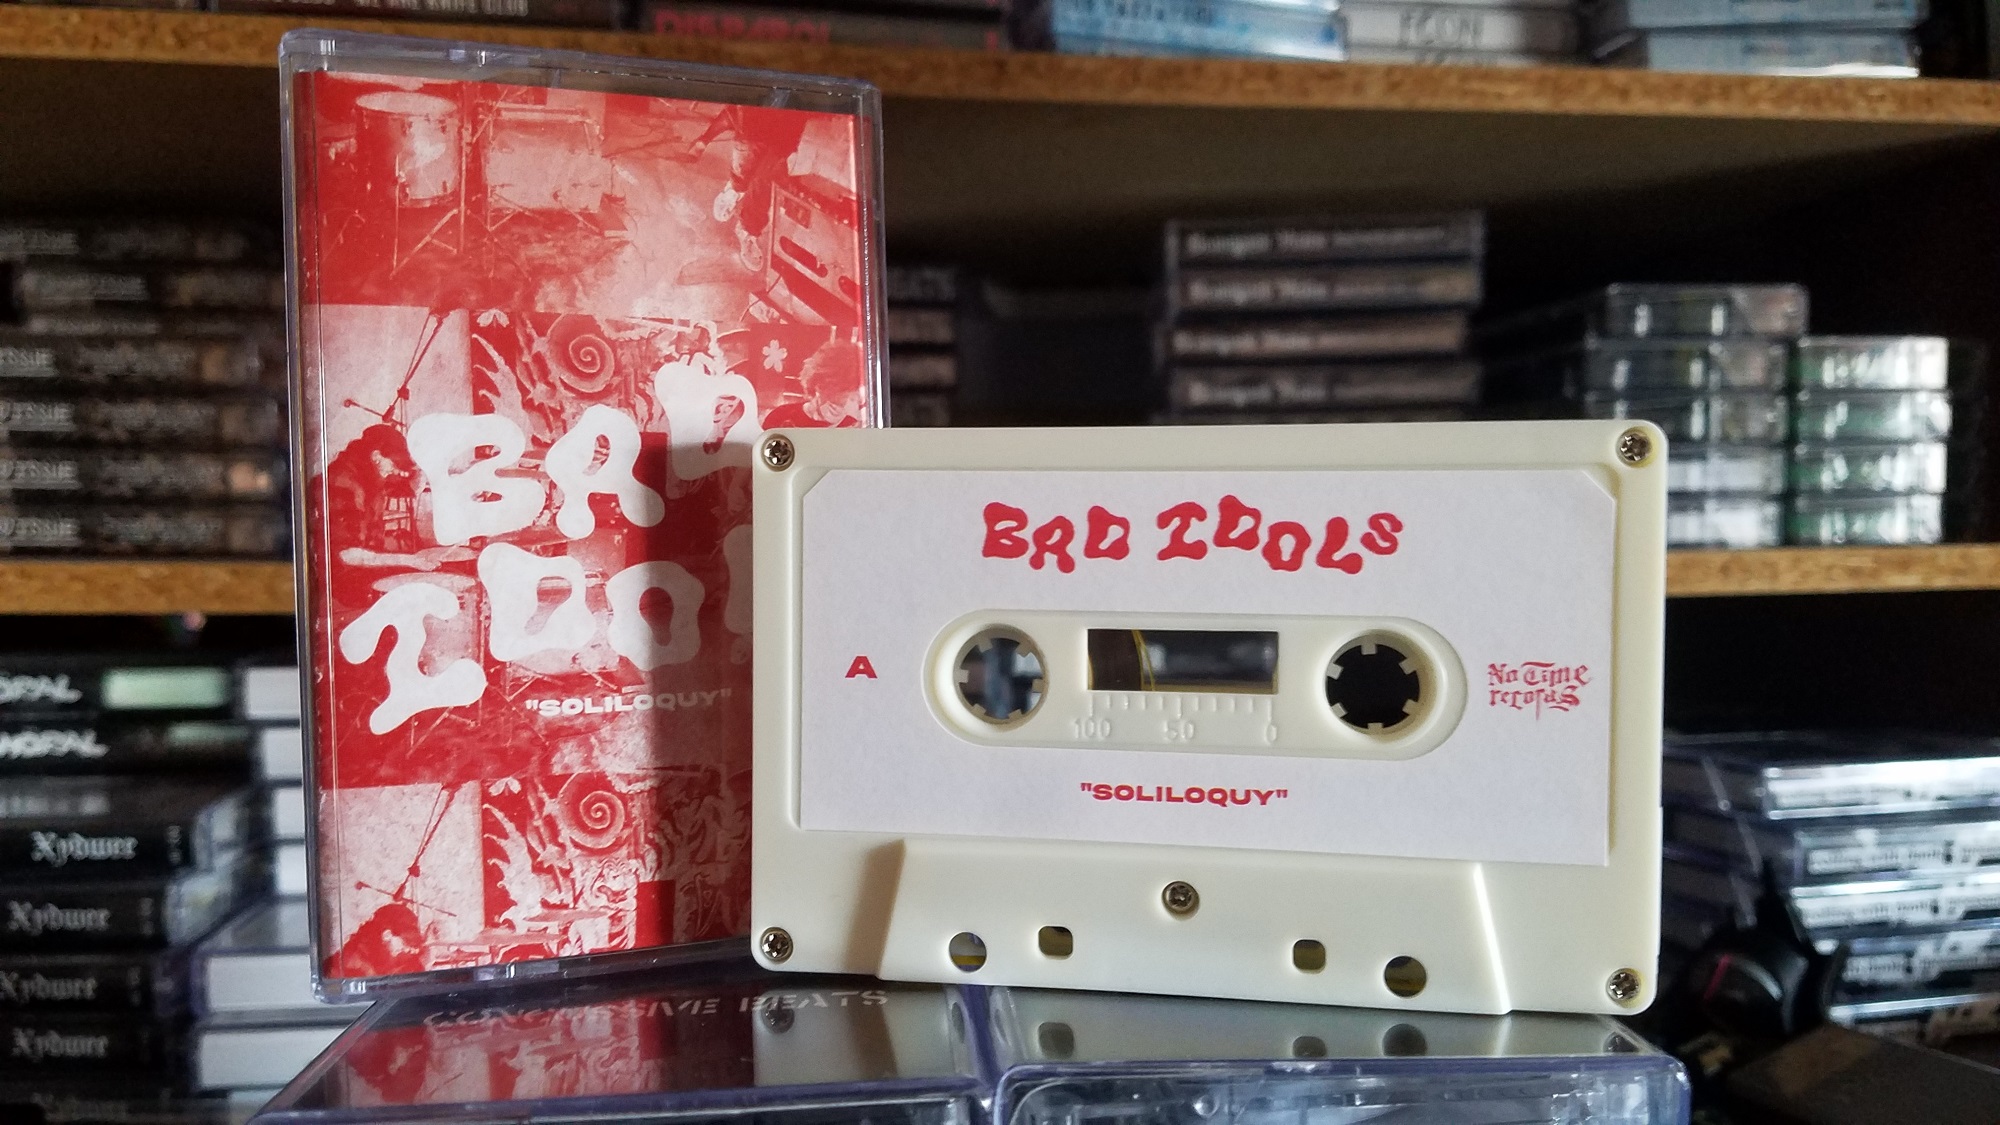 Bad Idols - Soliloquy Cassette